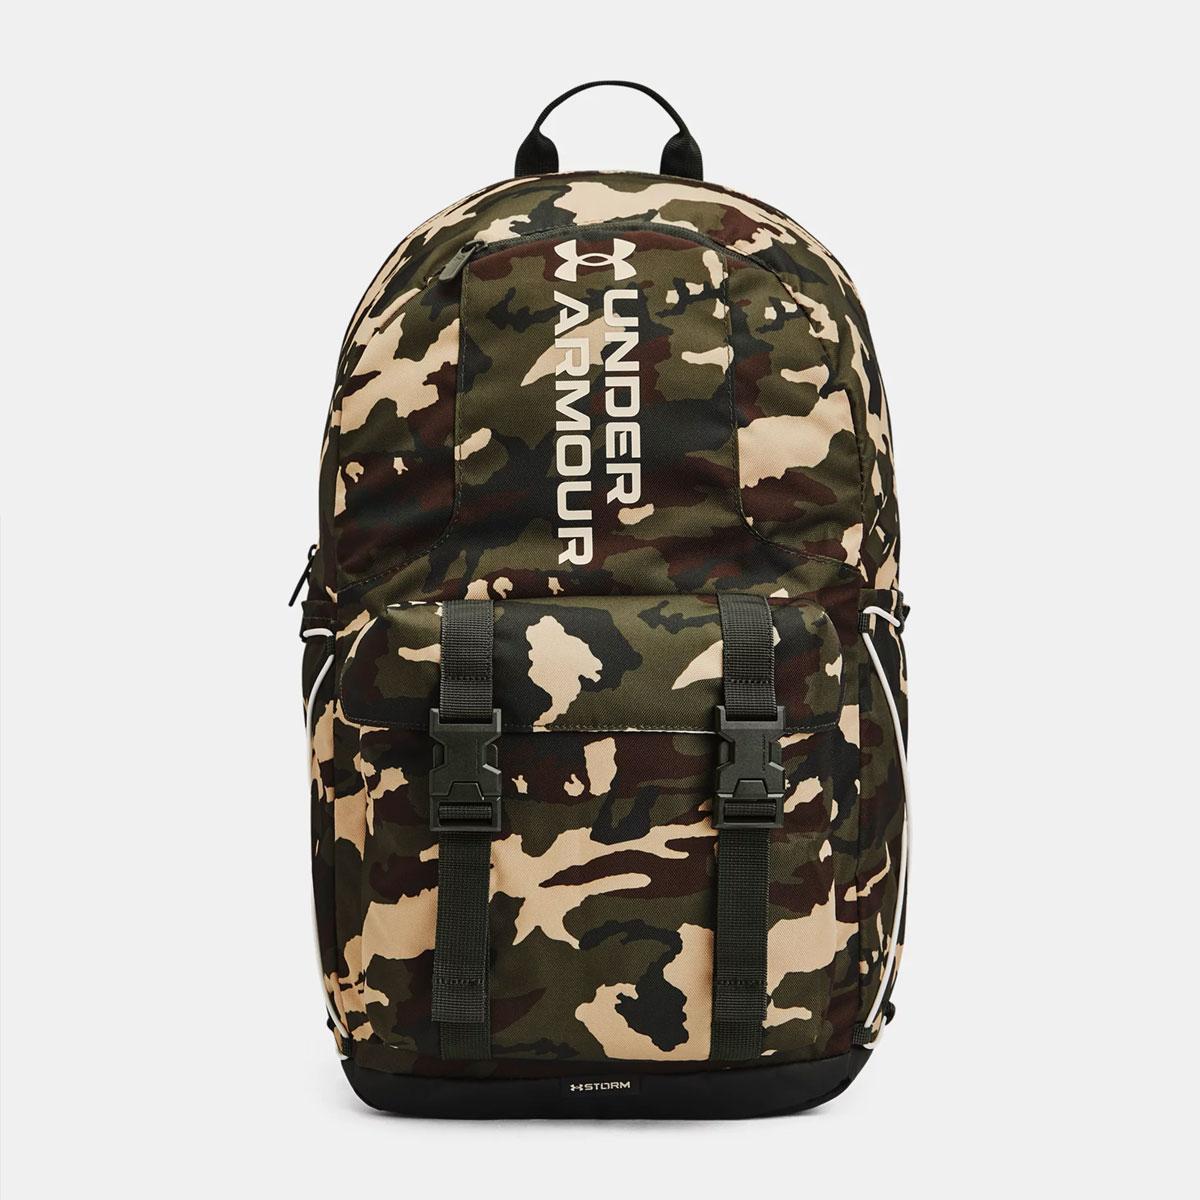 2020 Under Armour Gametime Backpack Bag Rucksack School Gym Laptop Carry Travel 